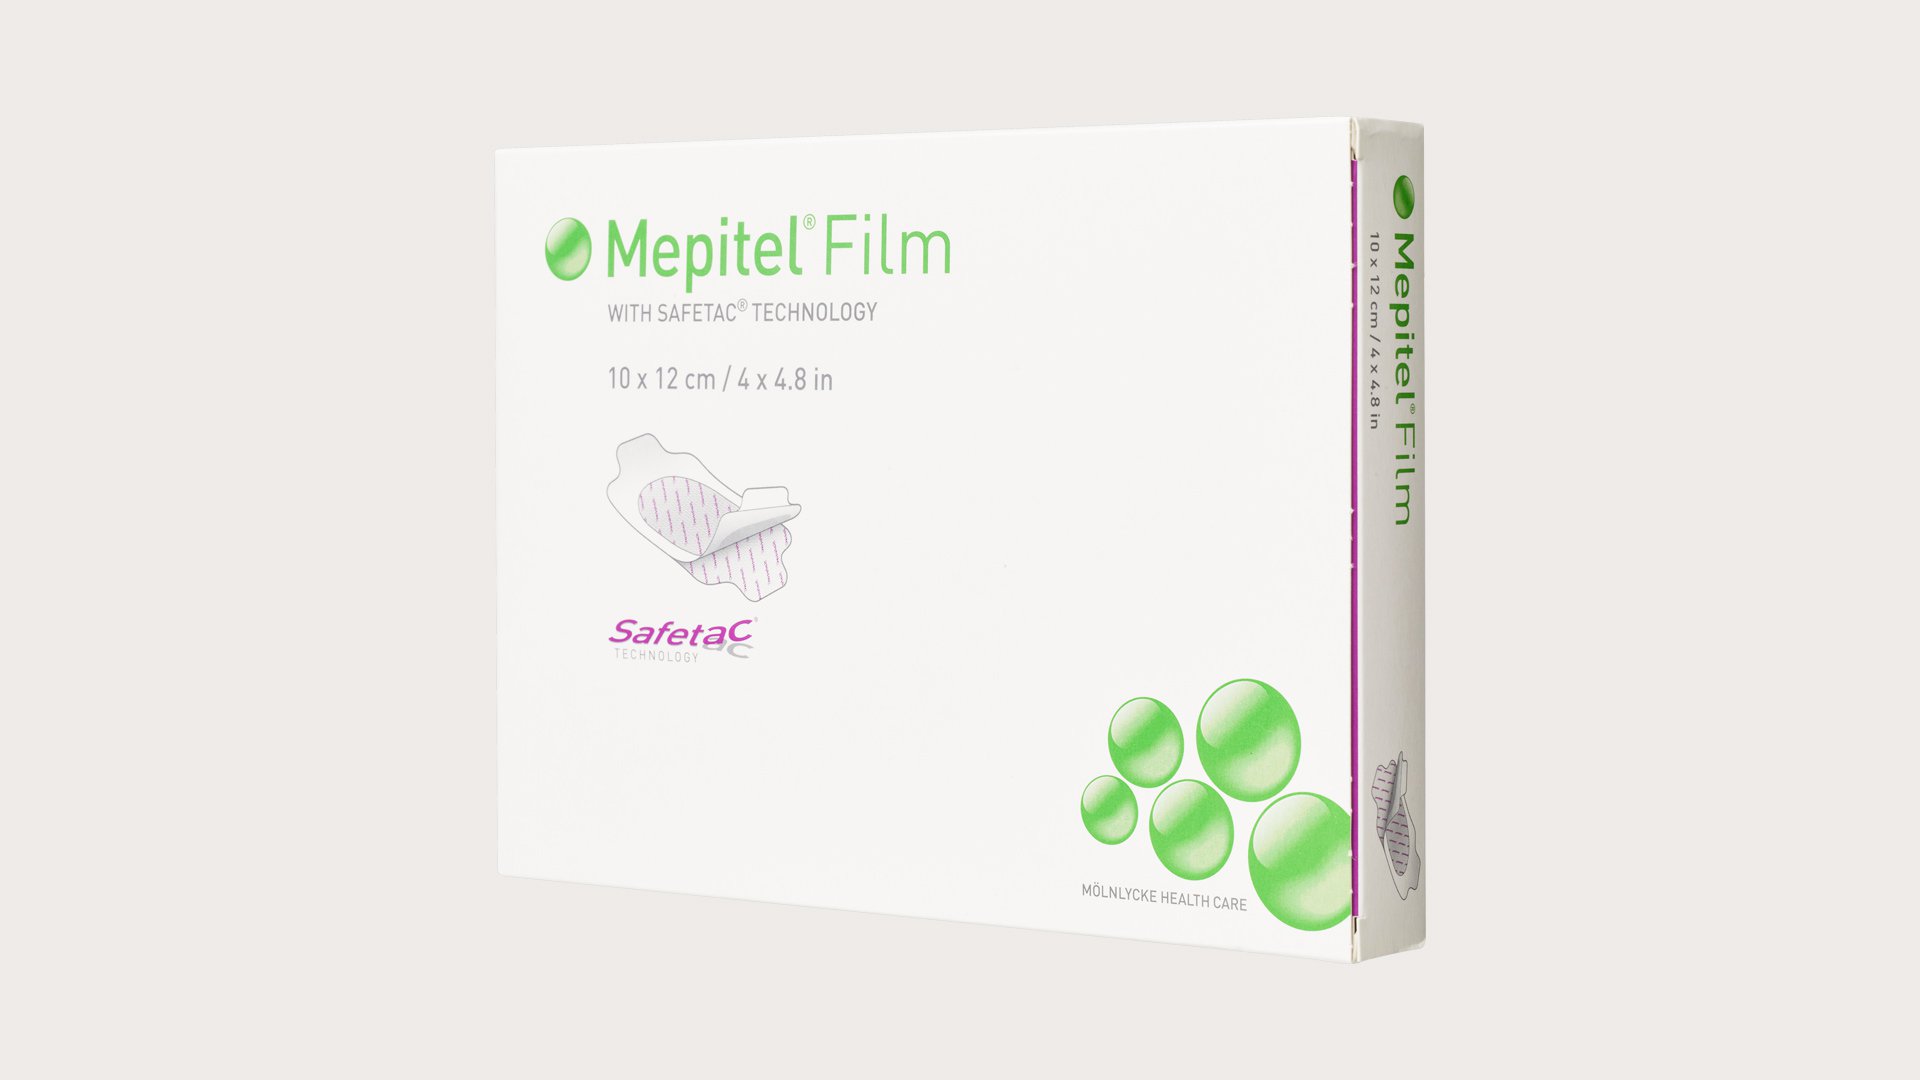 Mepitel Film image